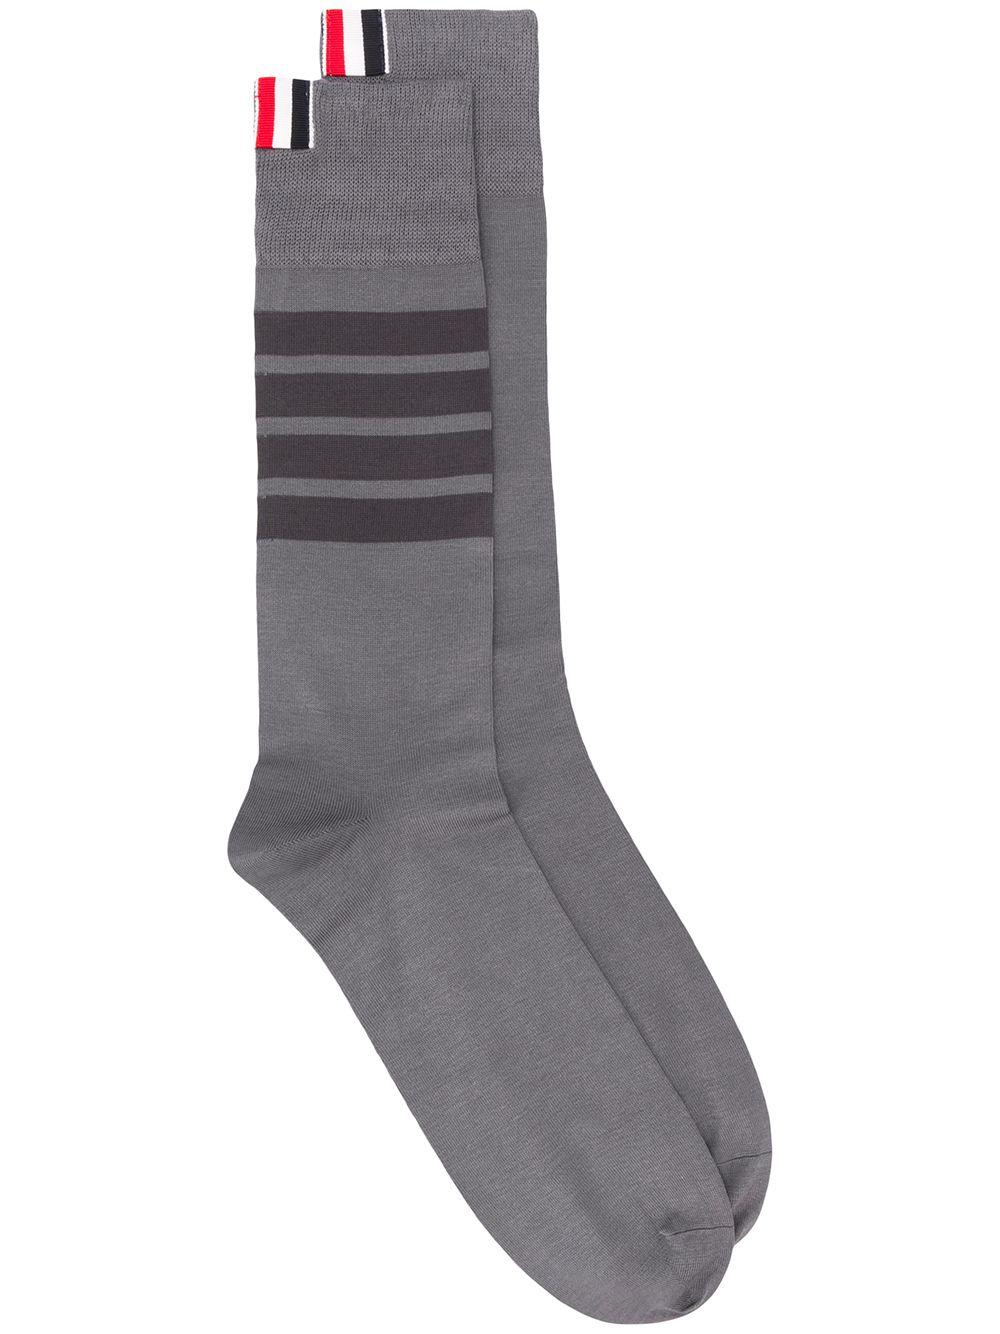 Thom Browne 4-bar Stripe Socks in Grey (Gray) for Men - Lyst